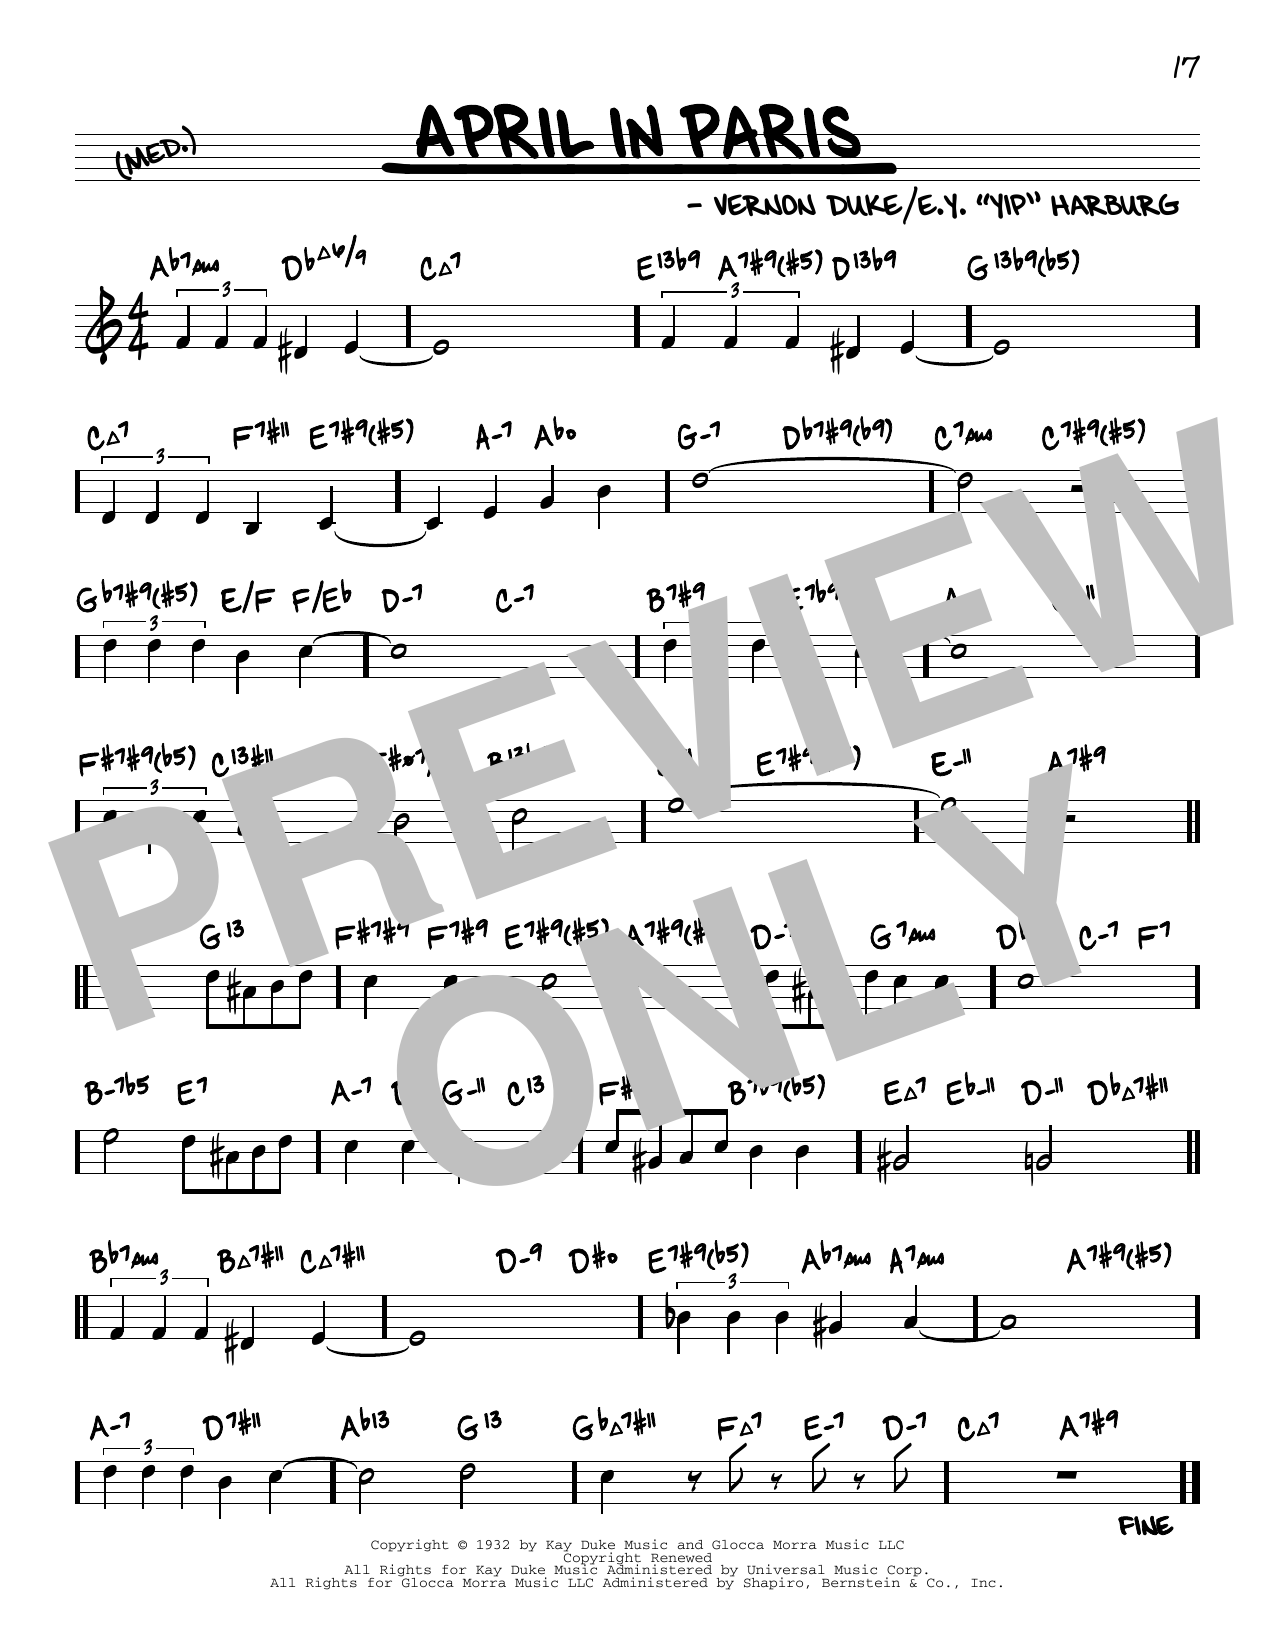 Vernon Duke April In Paris (arr. David Hazeltine) Sheet Music Notes & Chords for Real Book – Enhanced Chords - Download or Print PDF